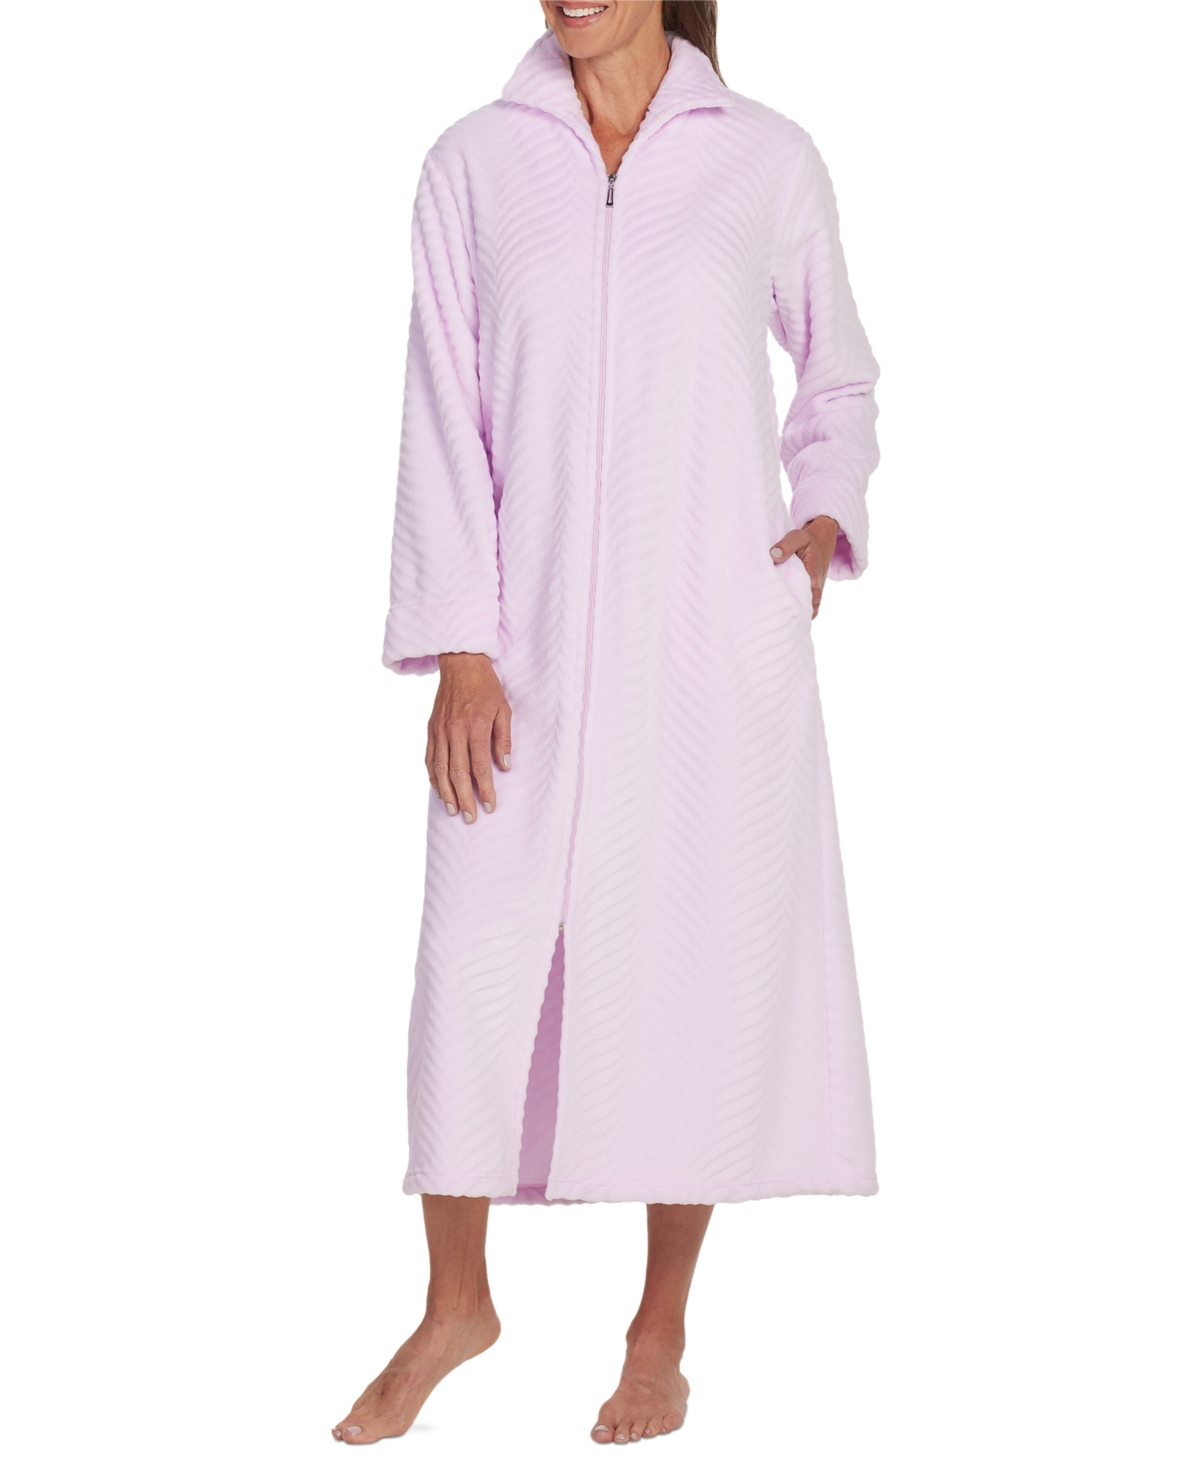 Women's Textured Zip-Front Robe - Lavender